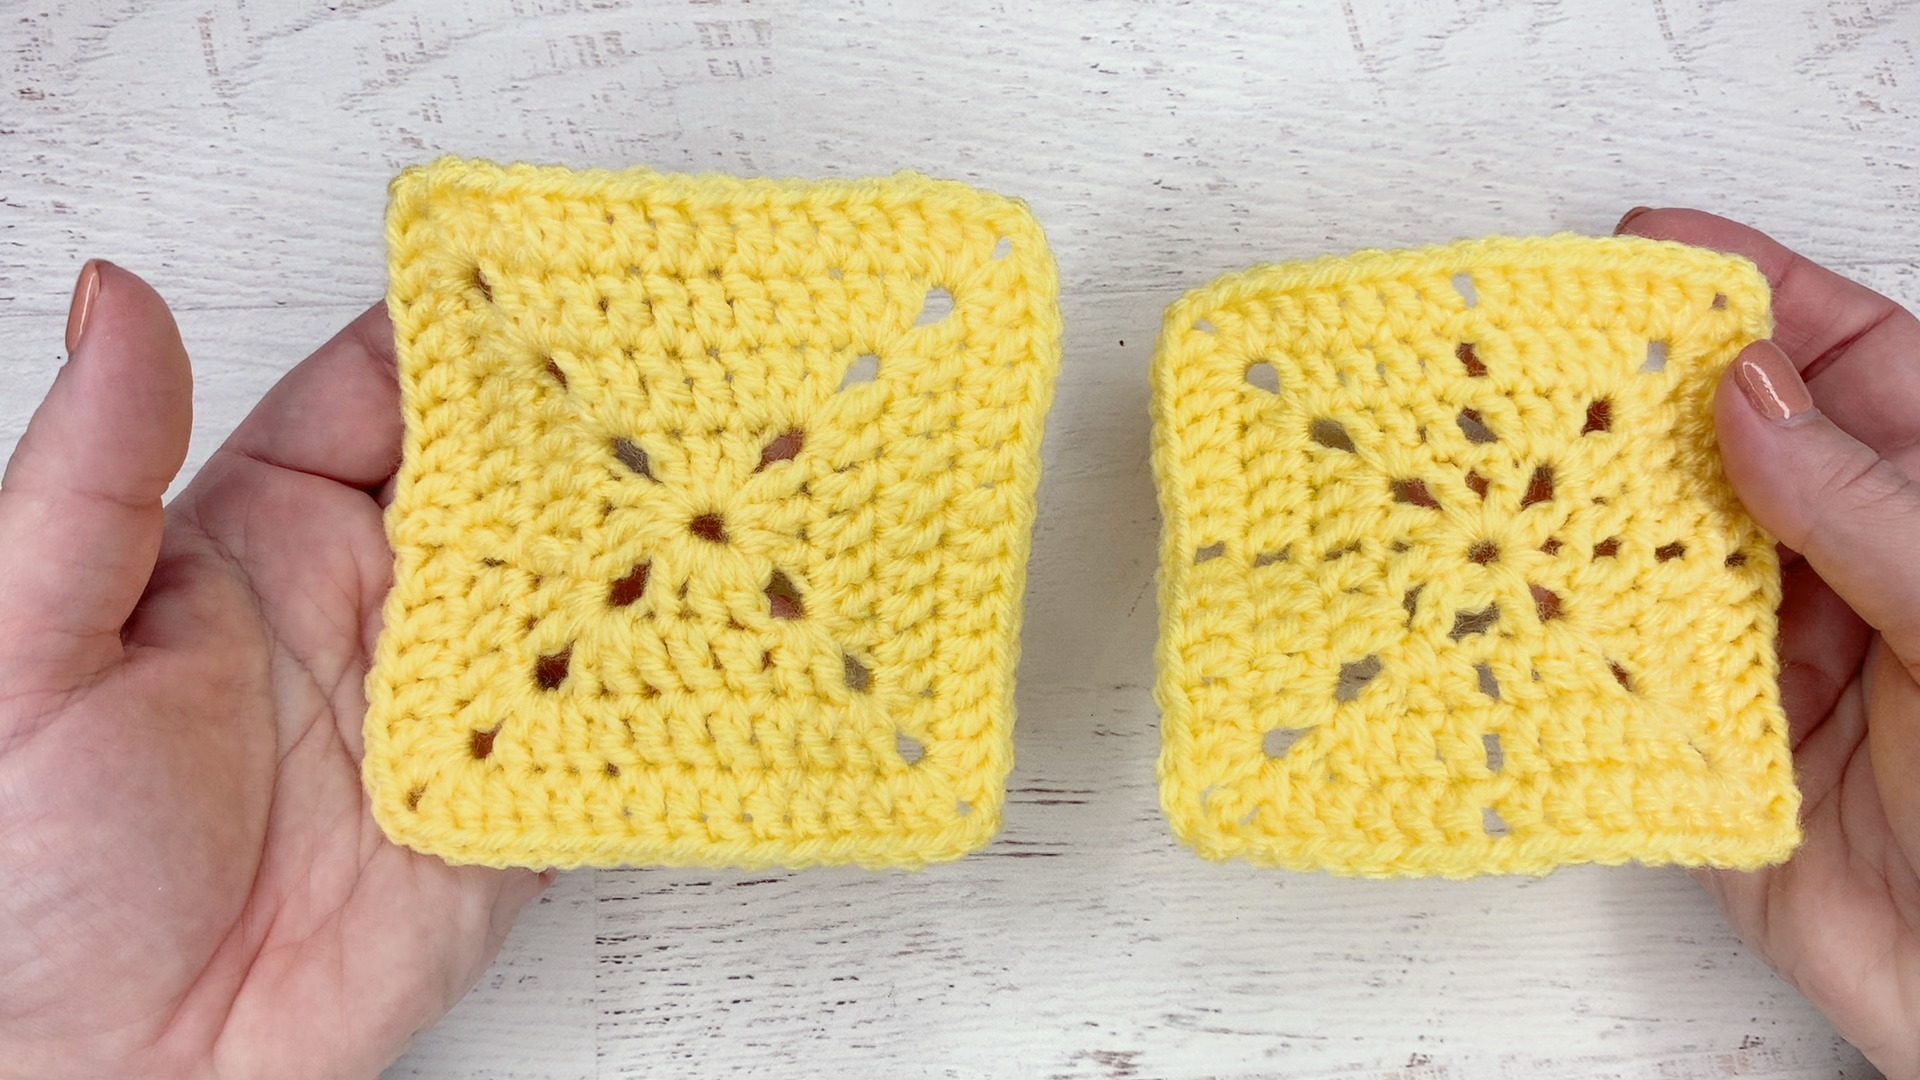 Crochet Solid Granny Square, Free Pattern + Video 